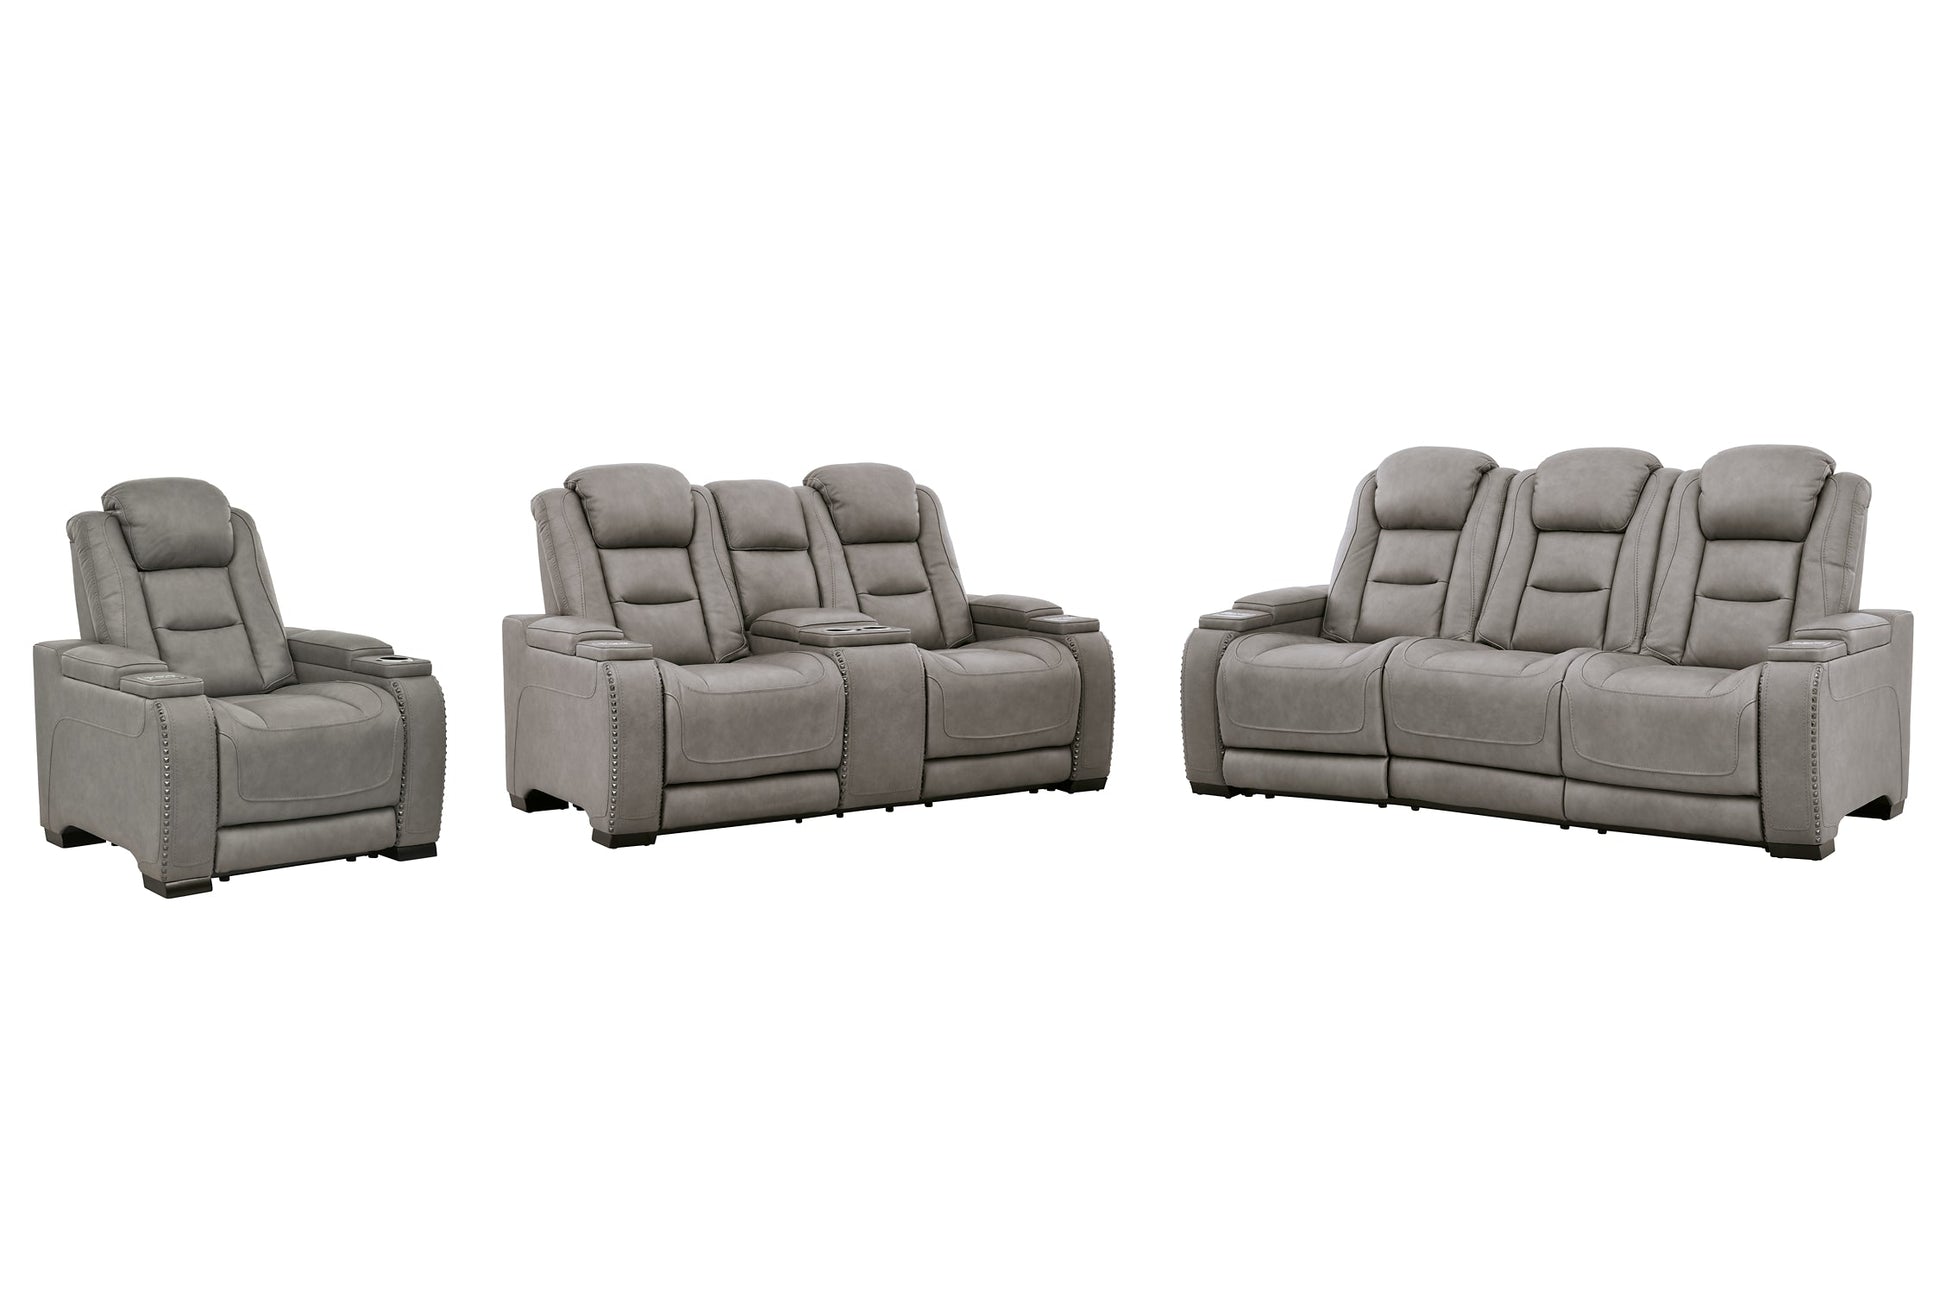 The Man-Den Sofa, Loveseat and Recliner at Cloud 9 Mattress & Furniture furniture, home furnishing, home decor